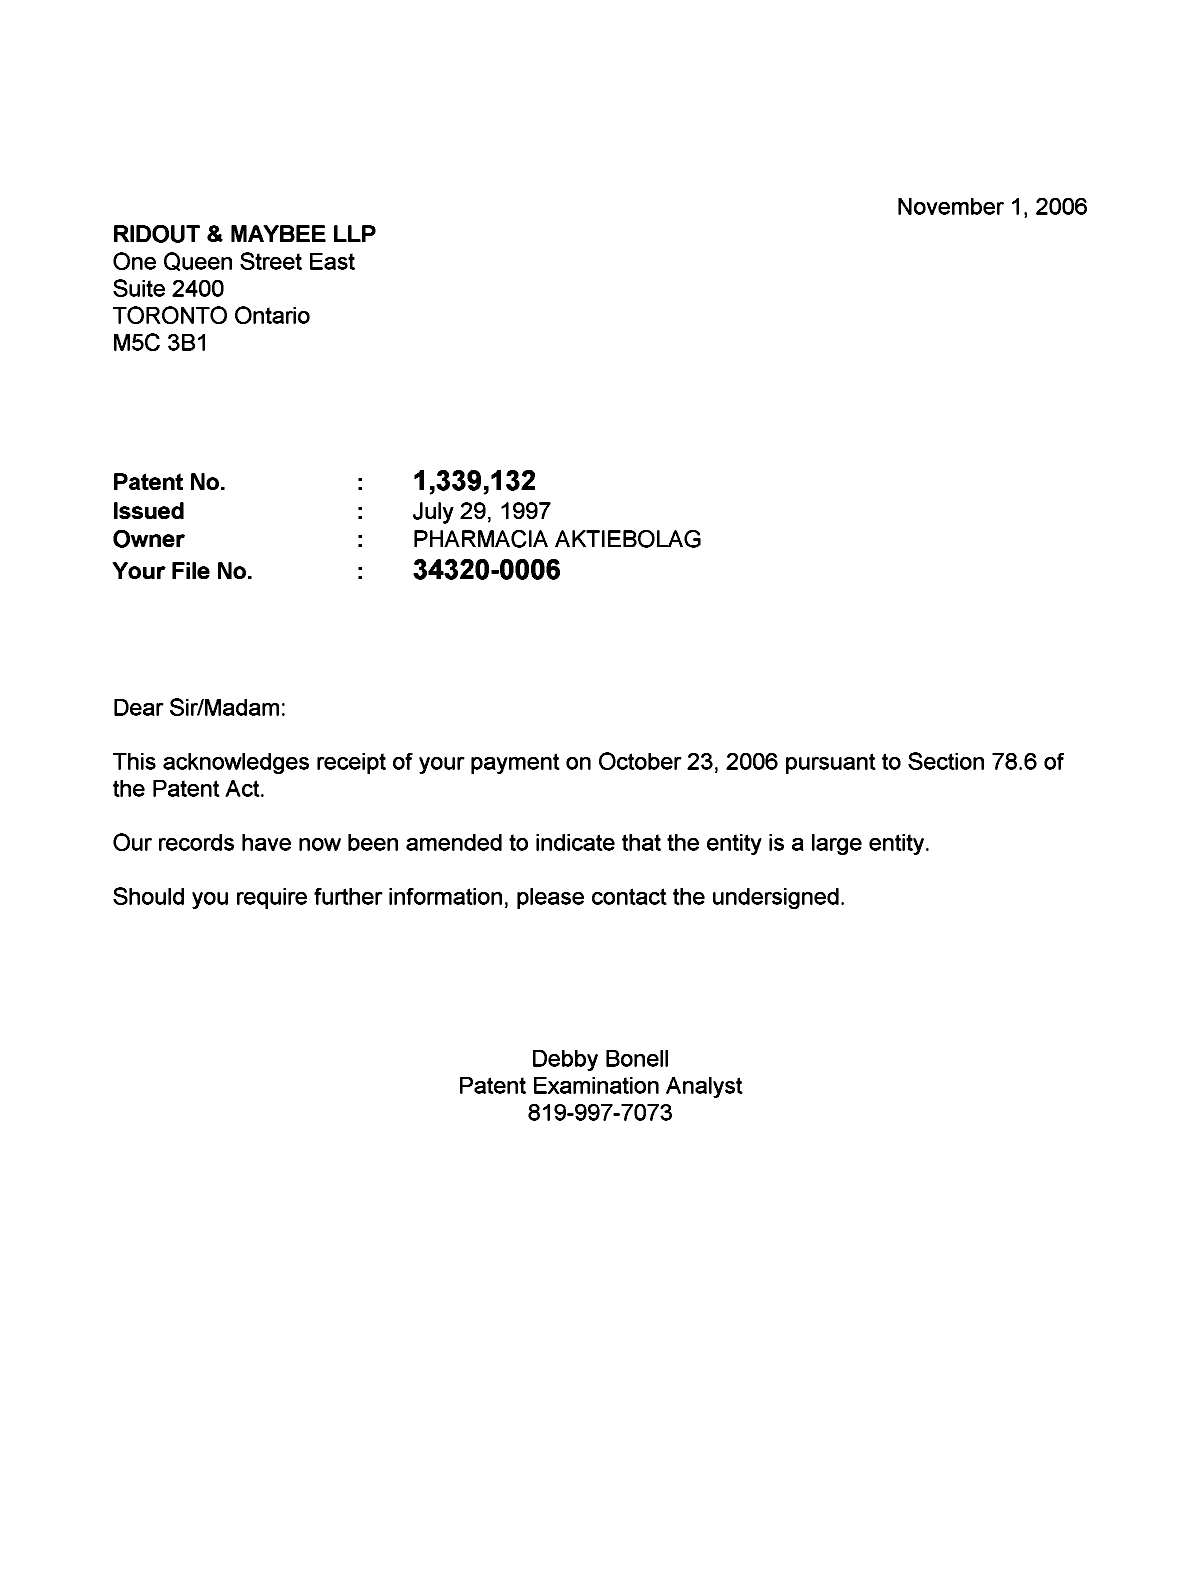 Canadian Patent Document 1339132. Correspondence 20051201. Image 1 of 1